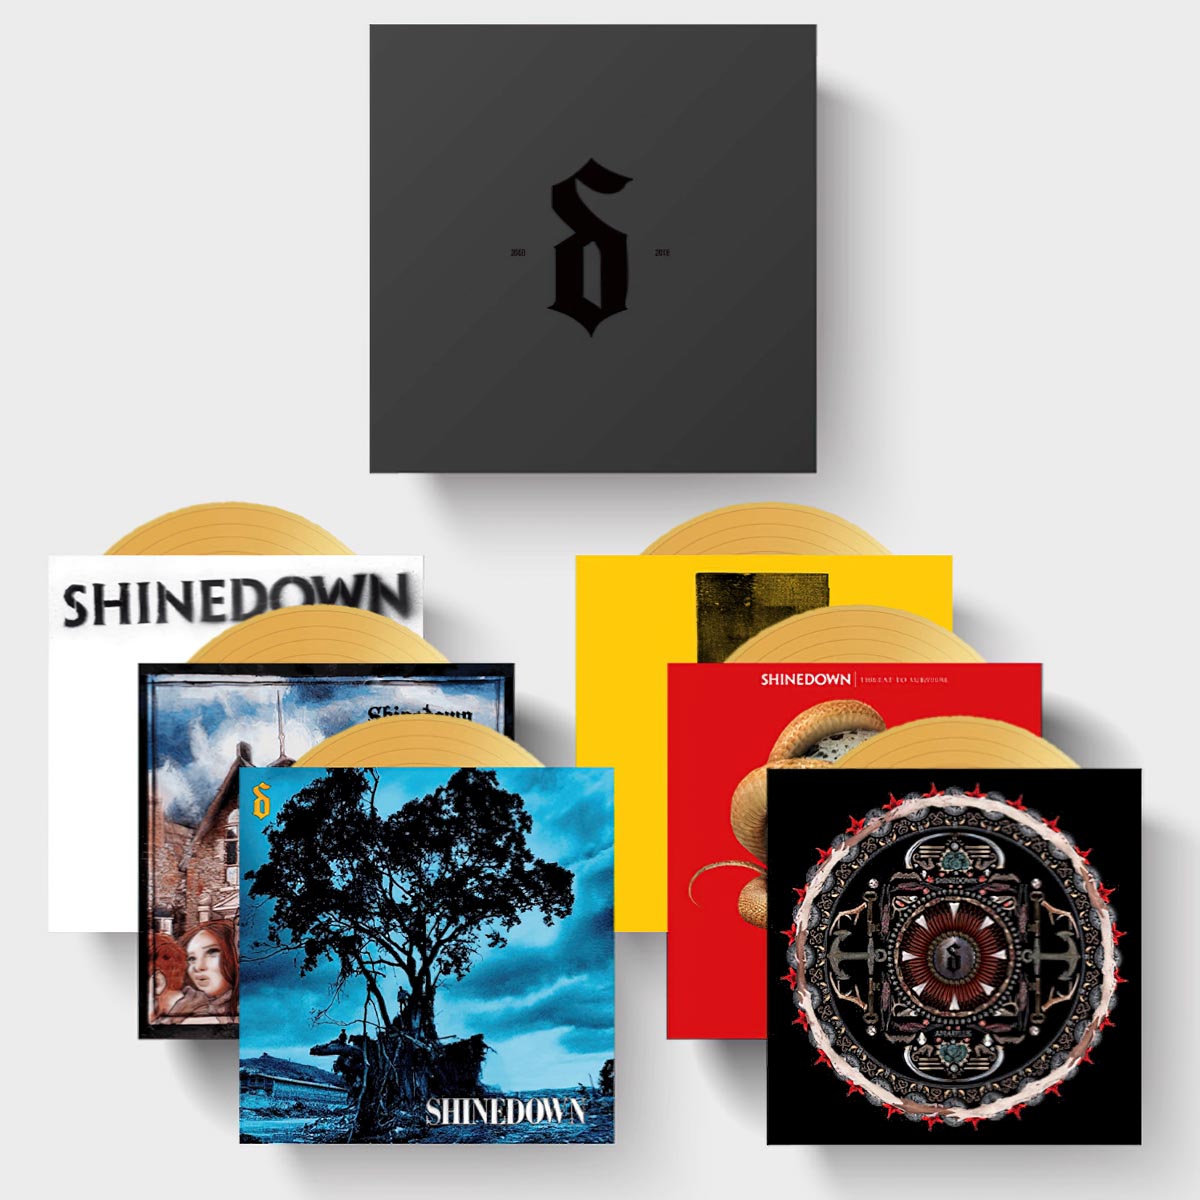 SHINEDOWN Announces Limited Edition Vinyl Box Set and Vinyl Album Reissues